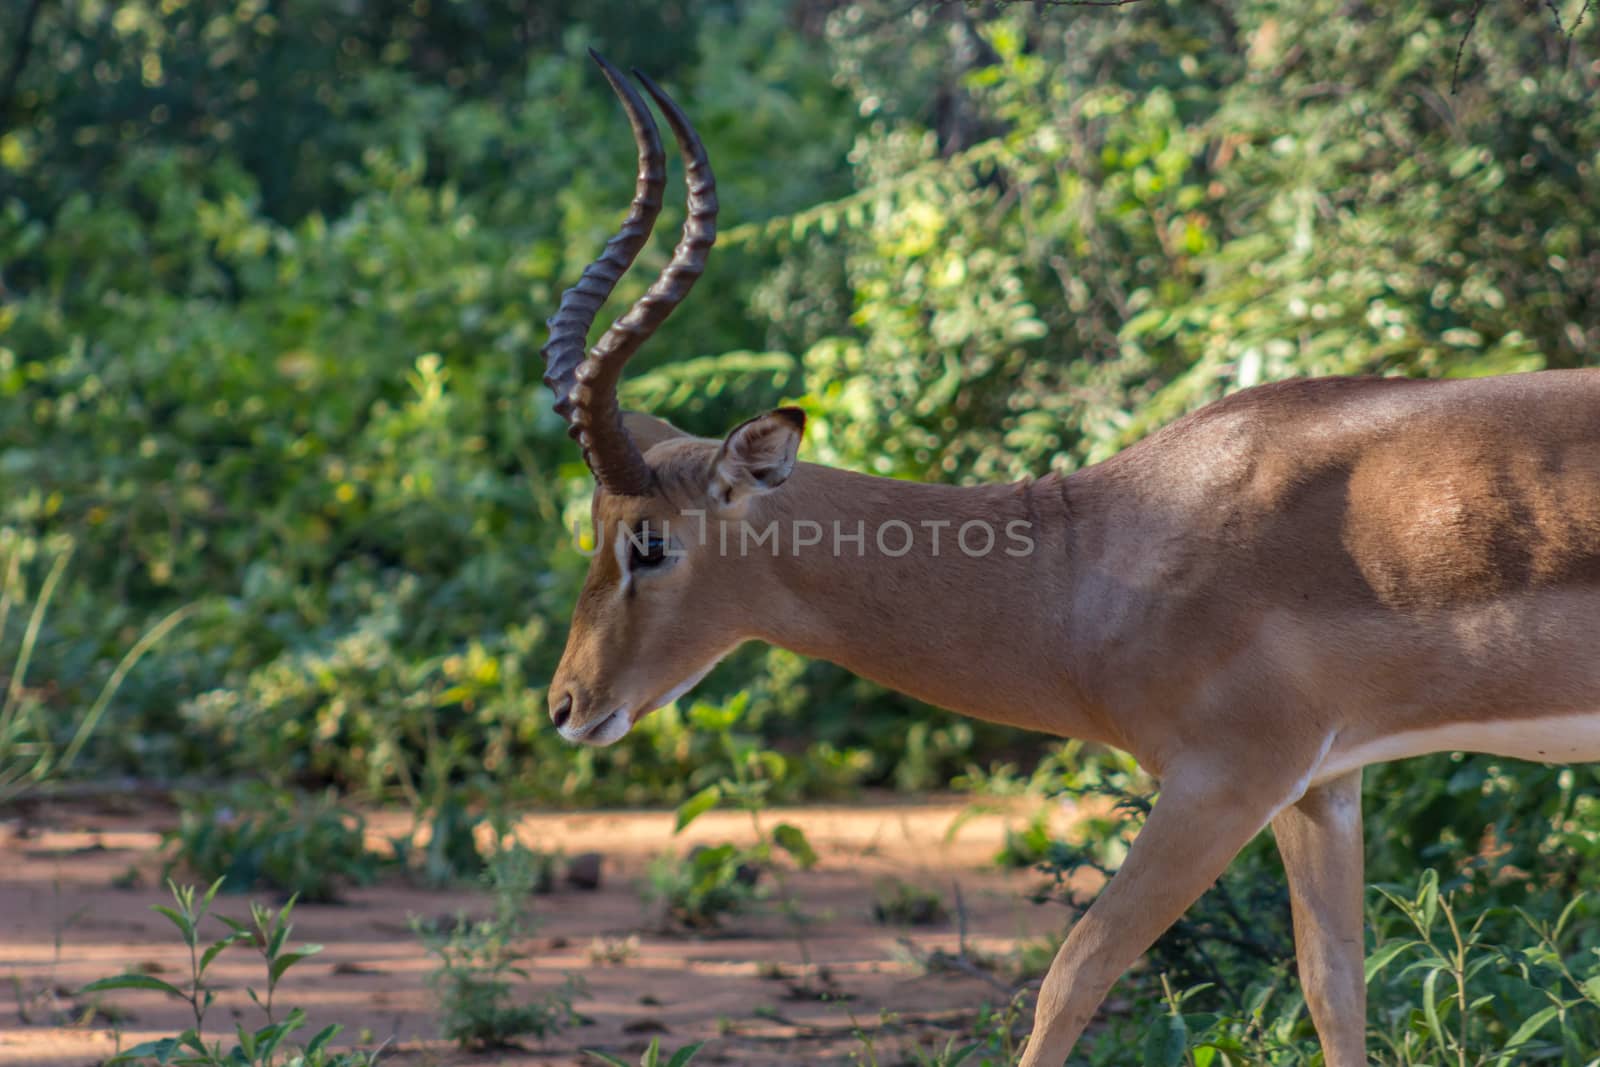 Impala (Aepyceros melampus) by RiaanAlbrecht